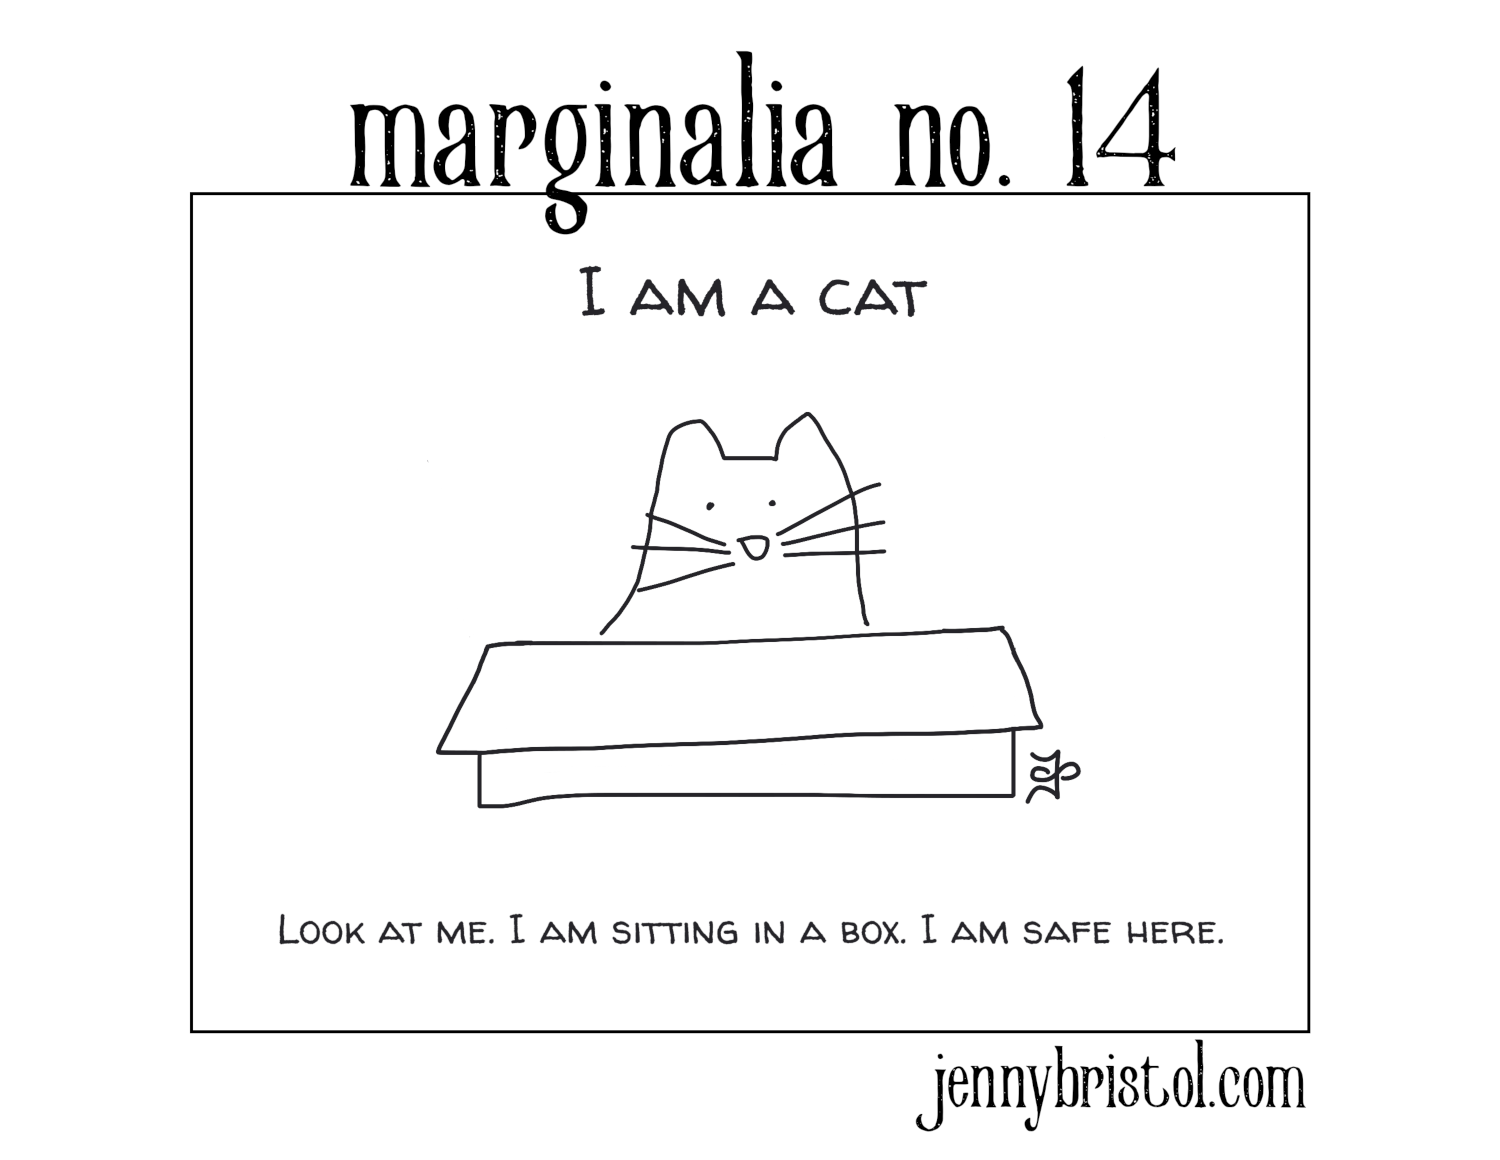 Marginalia no. 14 to post